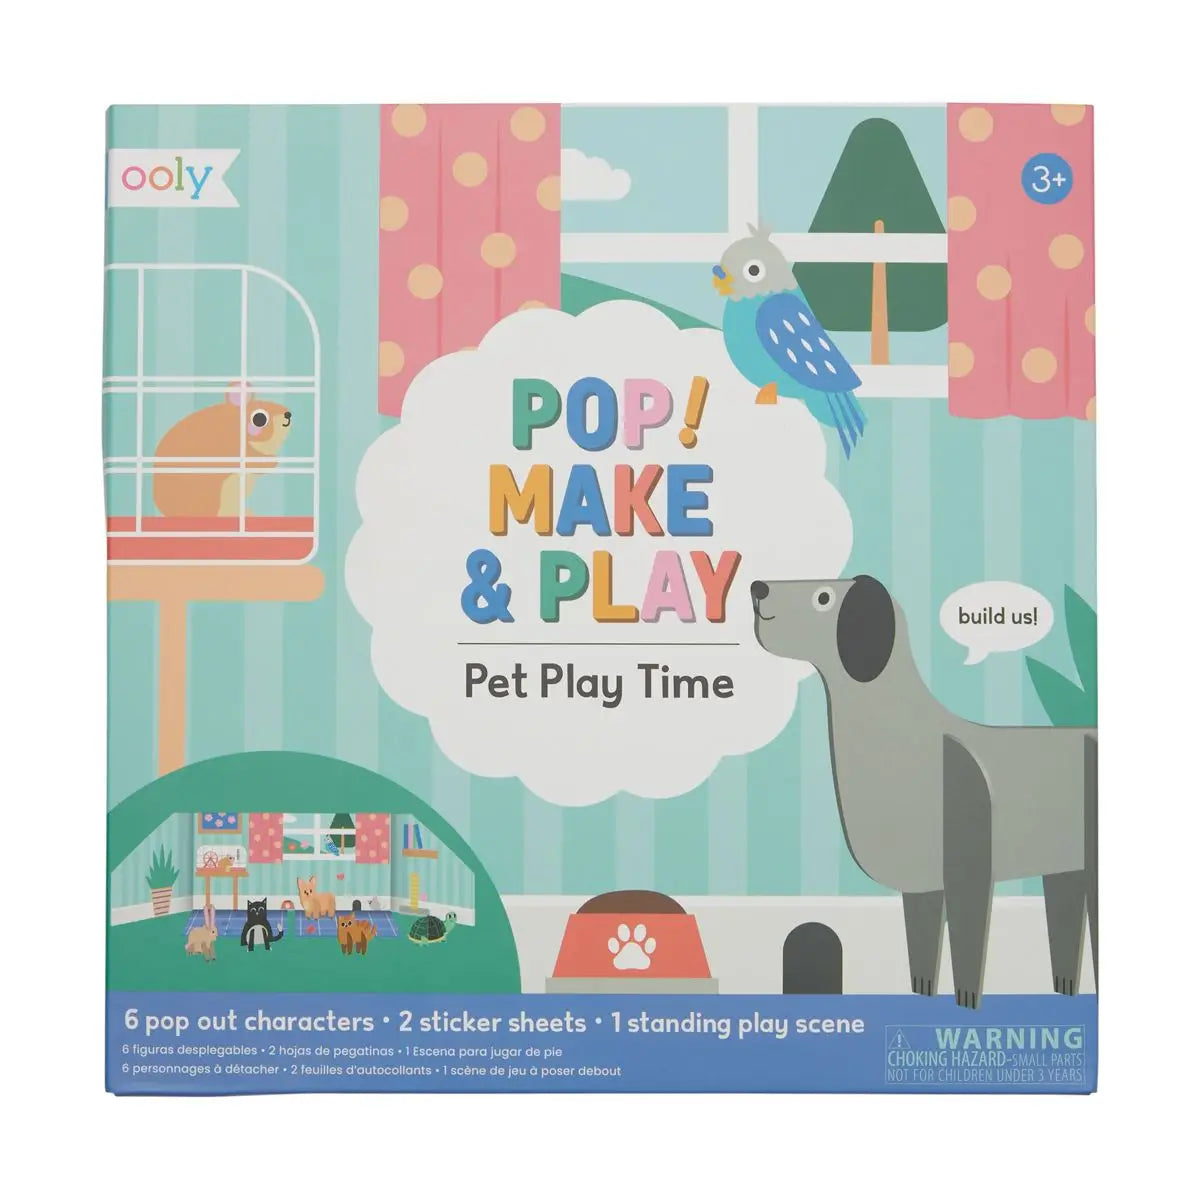 Pop! Make & Play- Pet Play Time